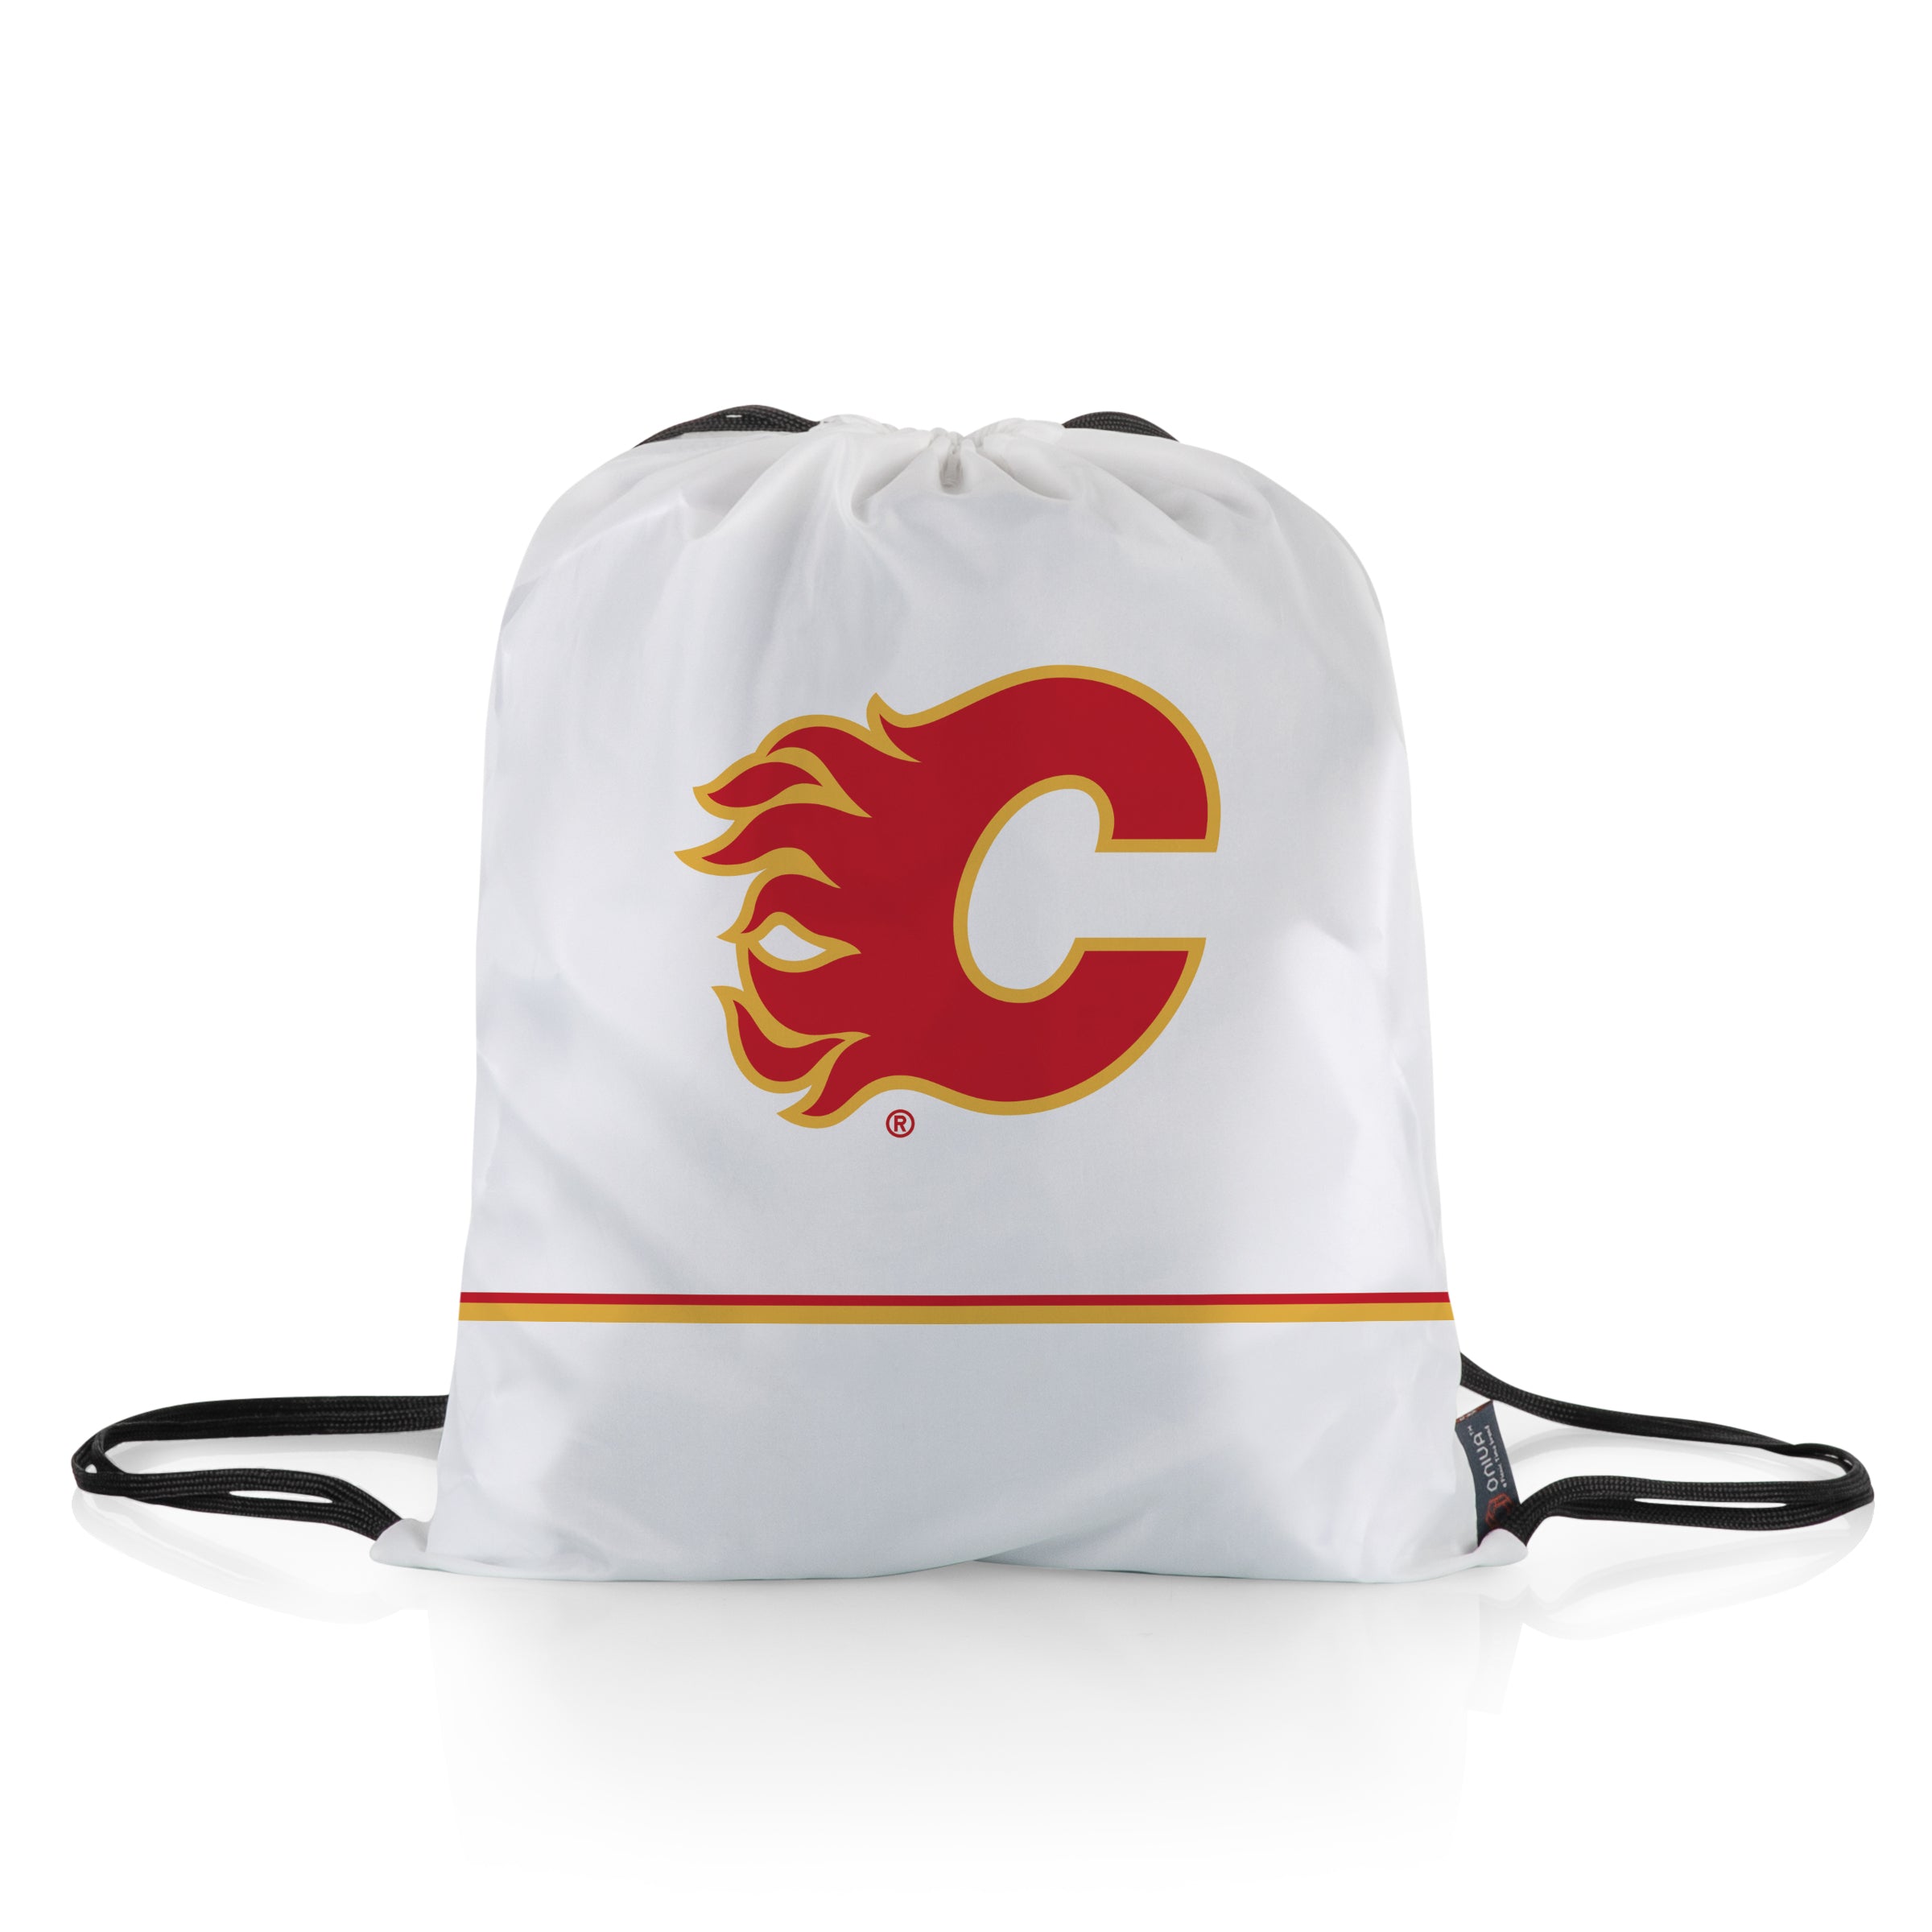 Calgary Flames - Impresa Picnic Blanket